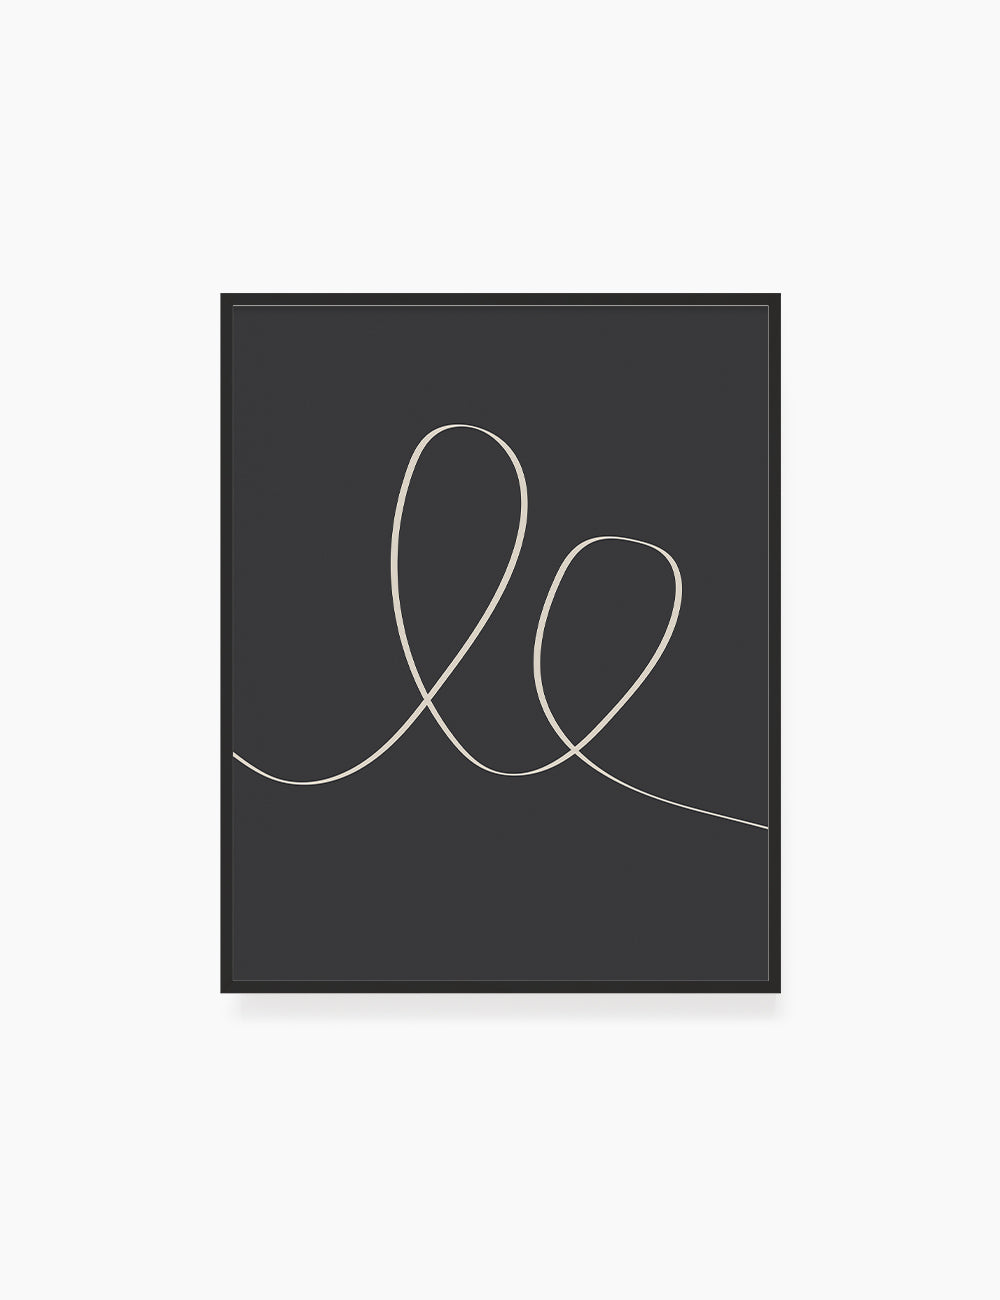 MINIMAL LINE ART. Abstract Heart Shape. Boho Aesthetic. Black and White. Dark Grey. Beige. Printable Wall Art Illustration. - PAPER MOON Art & Design